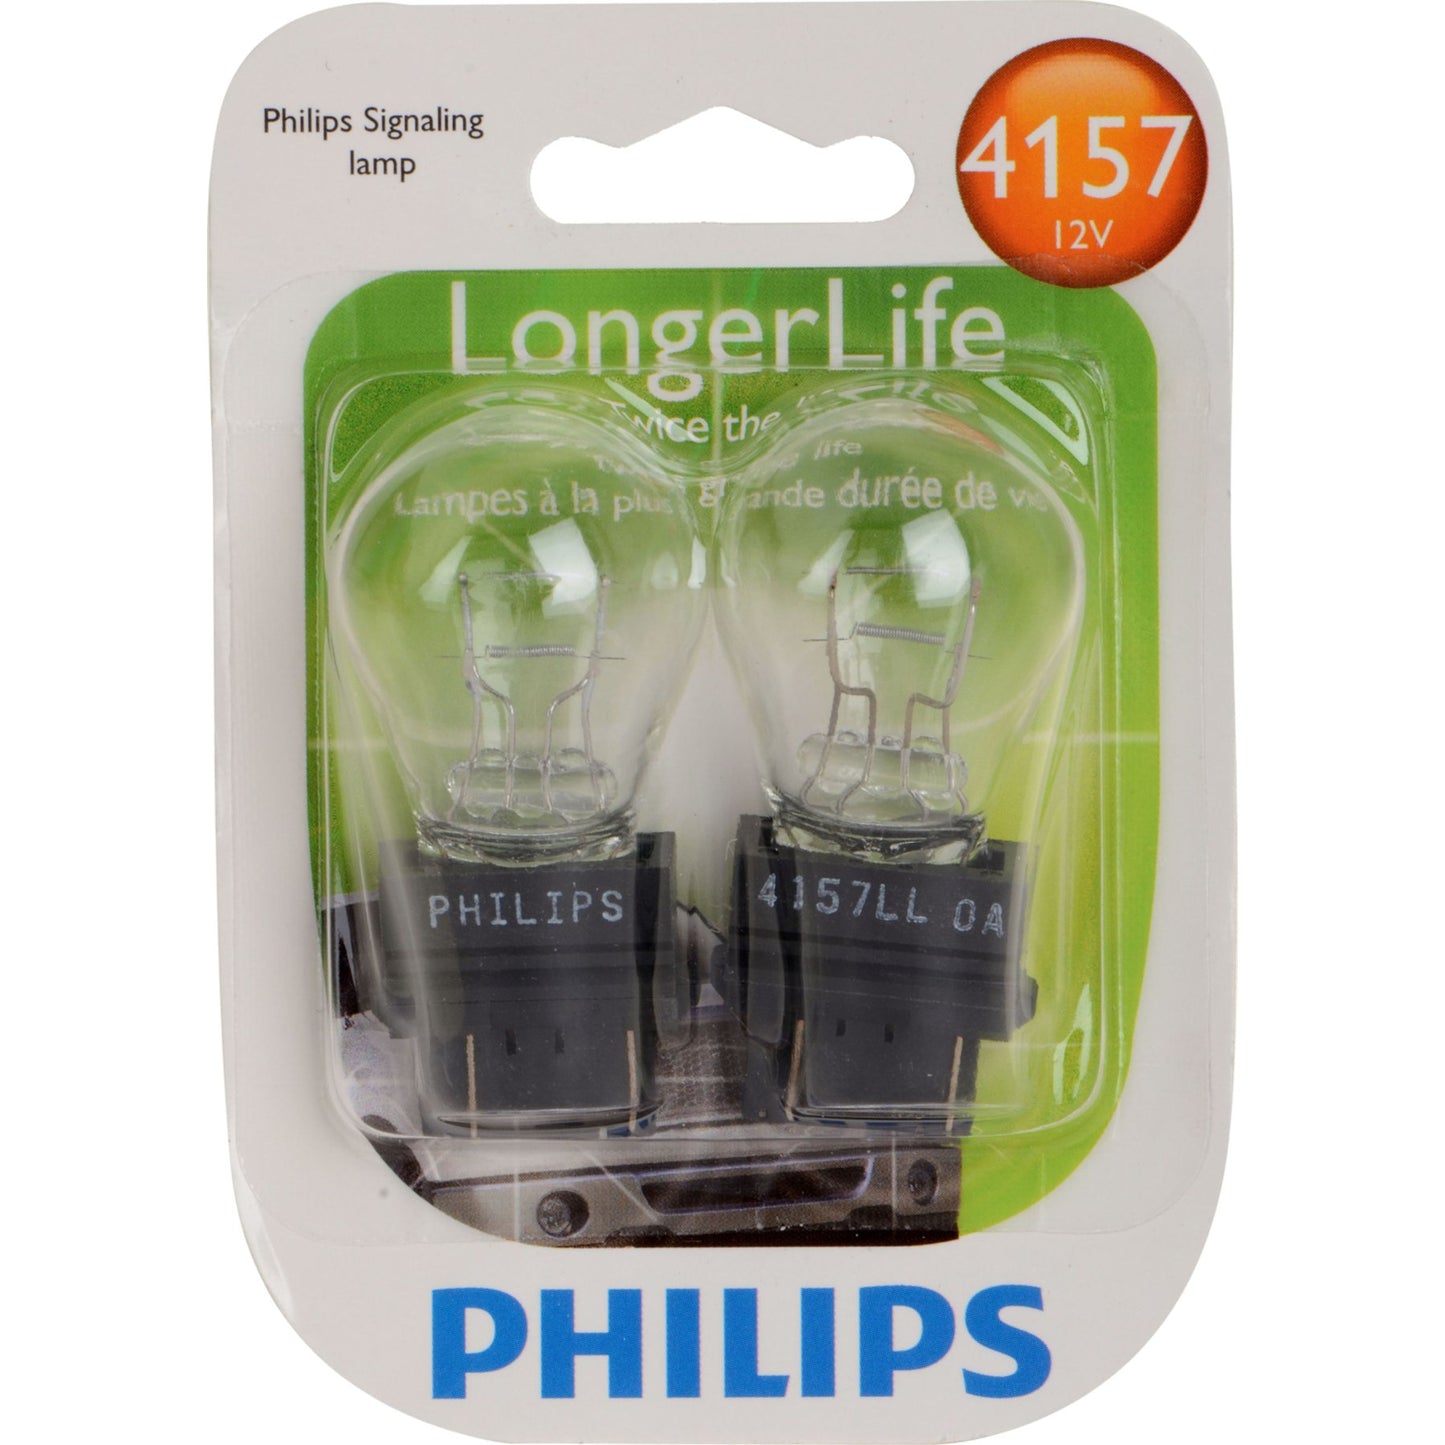 Philips Longer Life Miniature Bulb Damaged Box